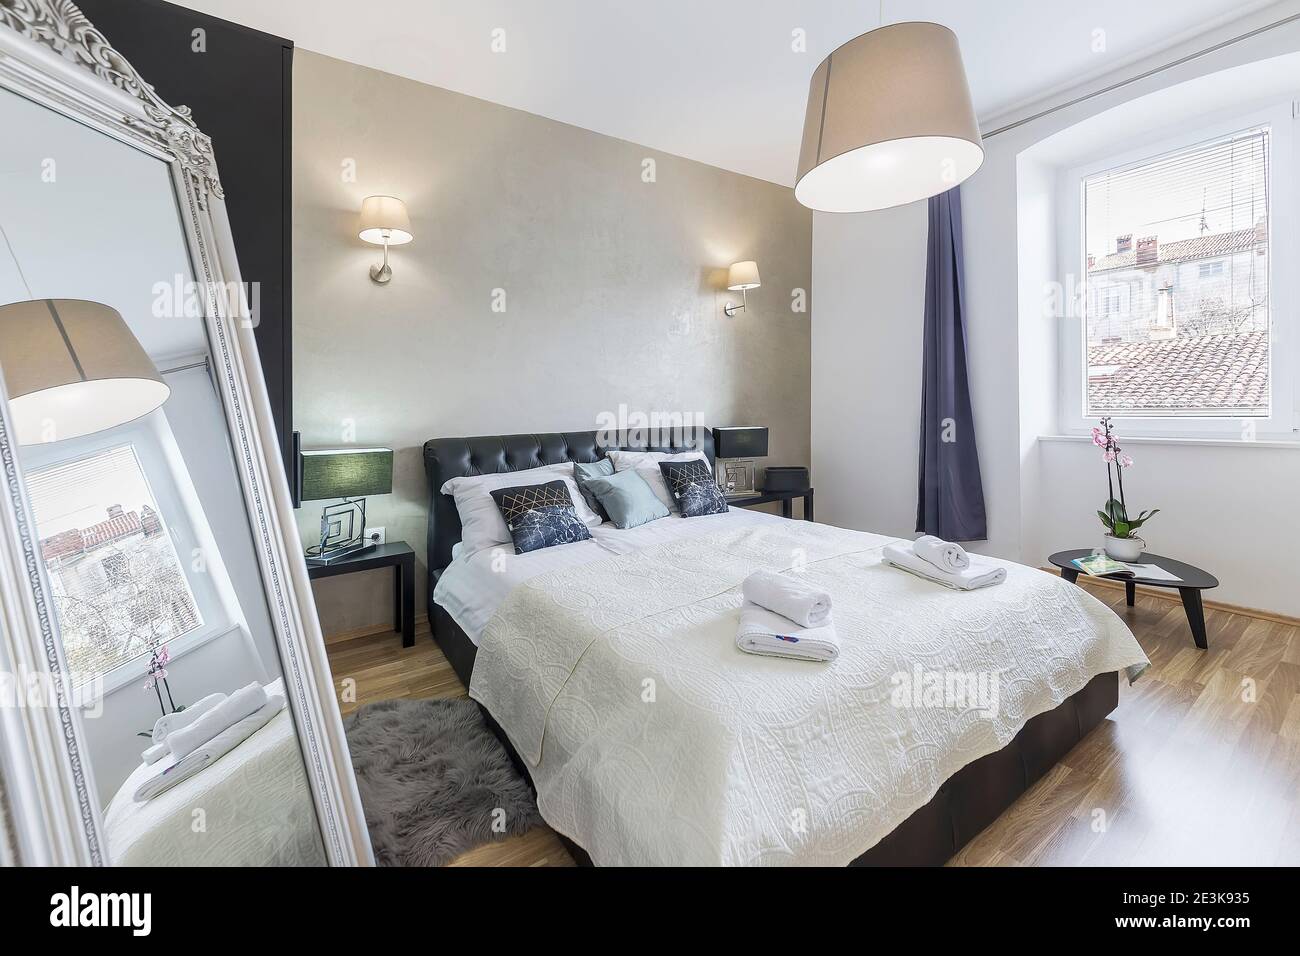 interior of modern luxury bedroom accommodation Stock Photo